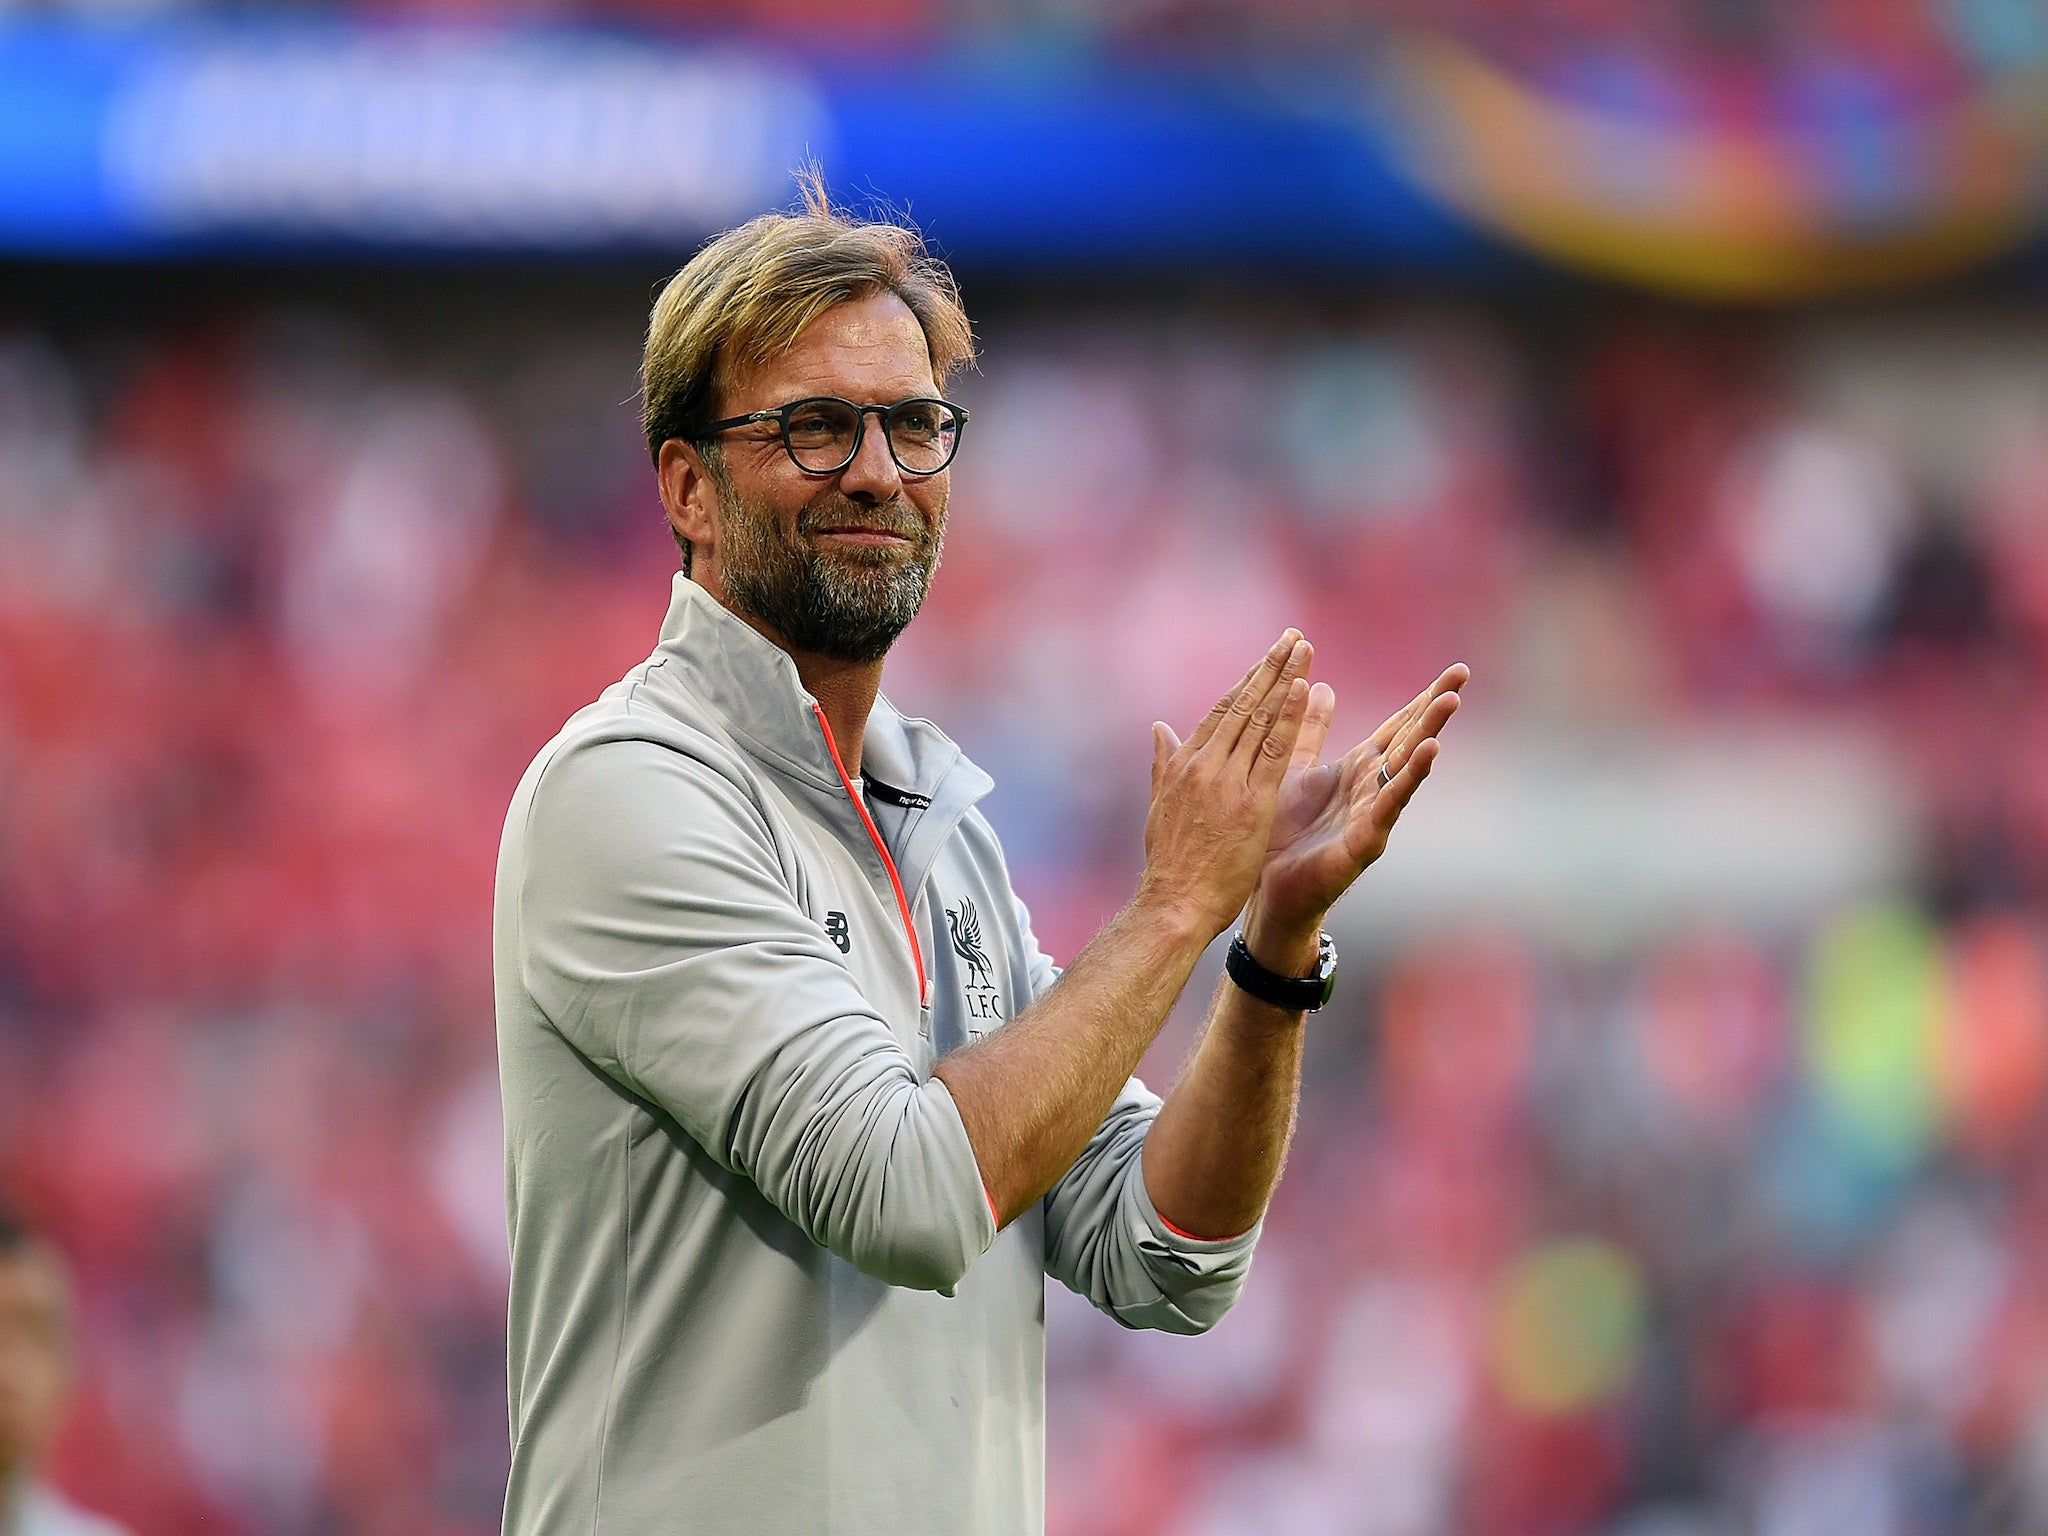 Liverpool manager Jurgen Klopp has promised big things